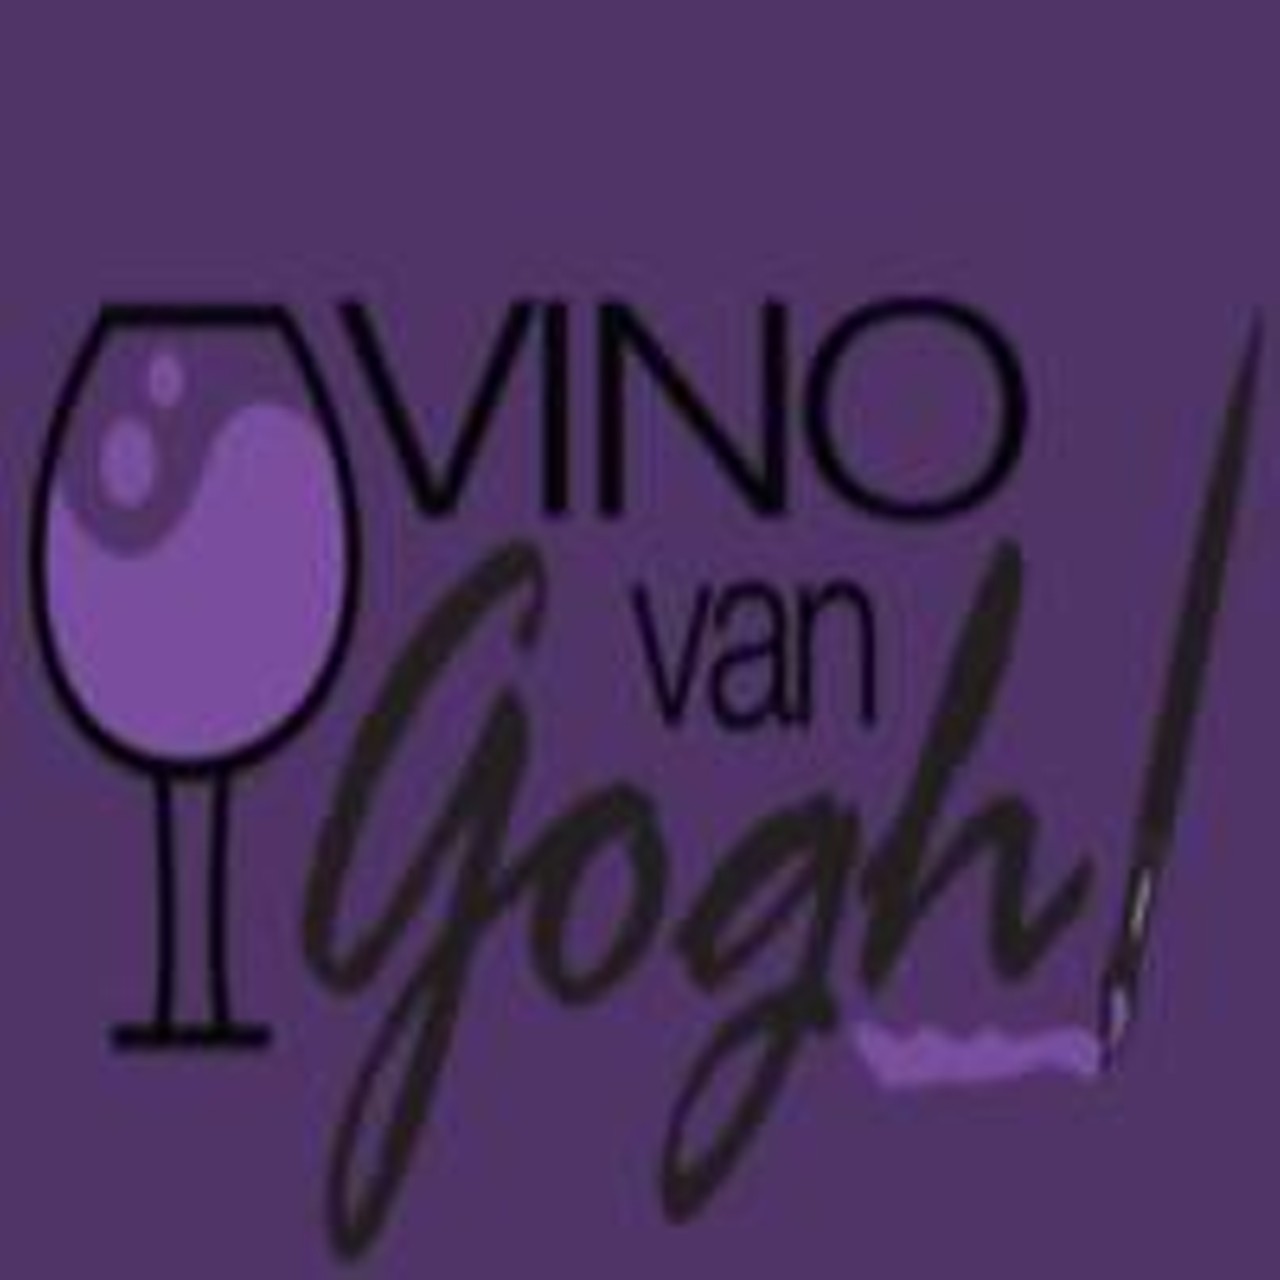 Vino Van Gogh